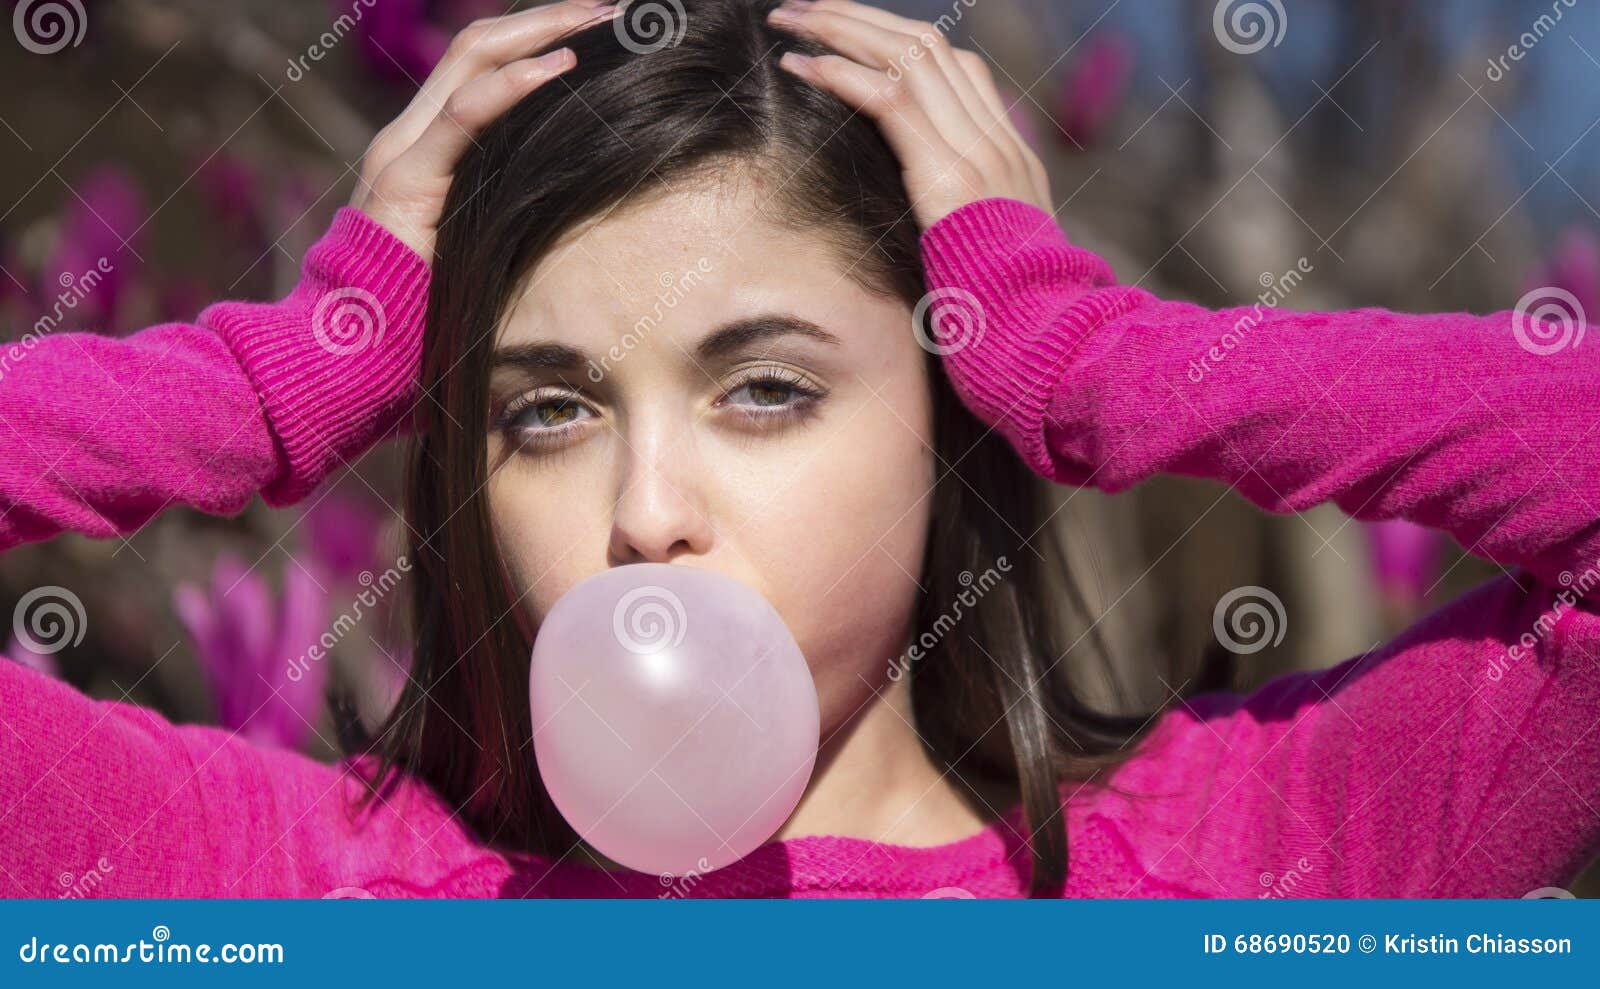 bubble gum blowing teen girls xxx porn video pic